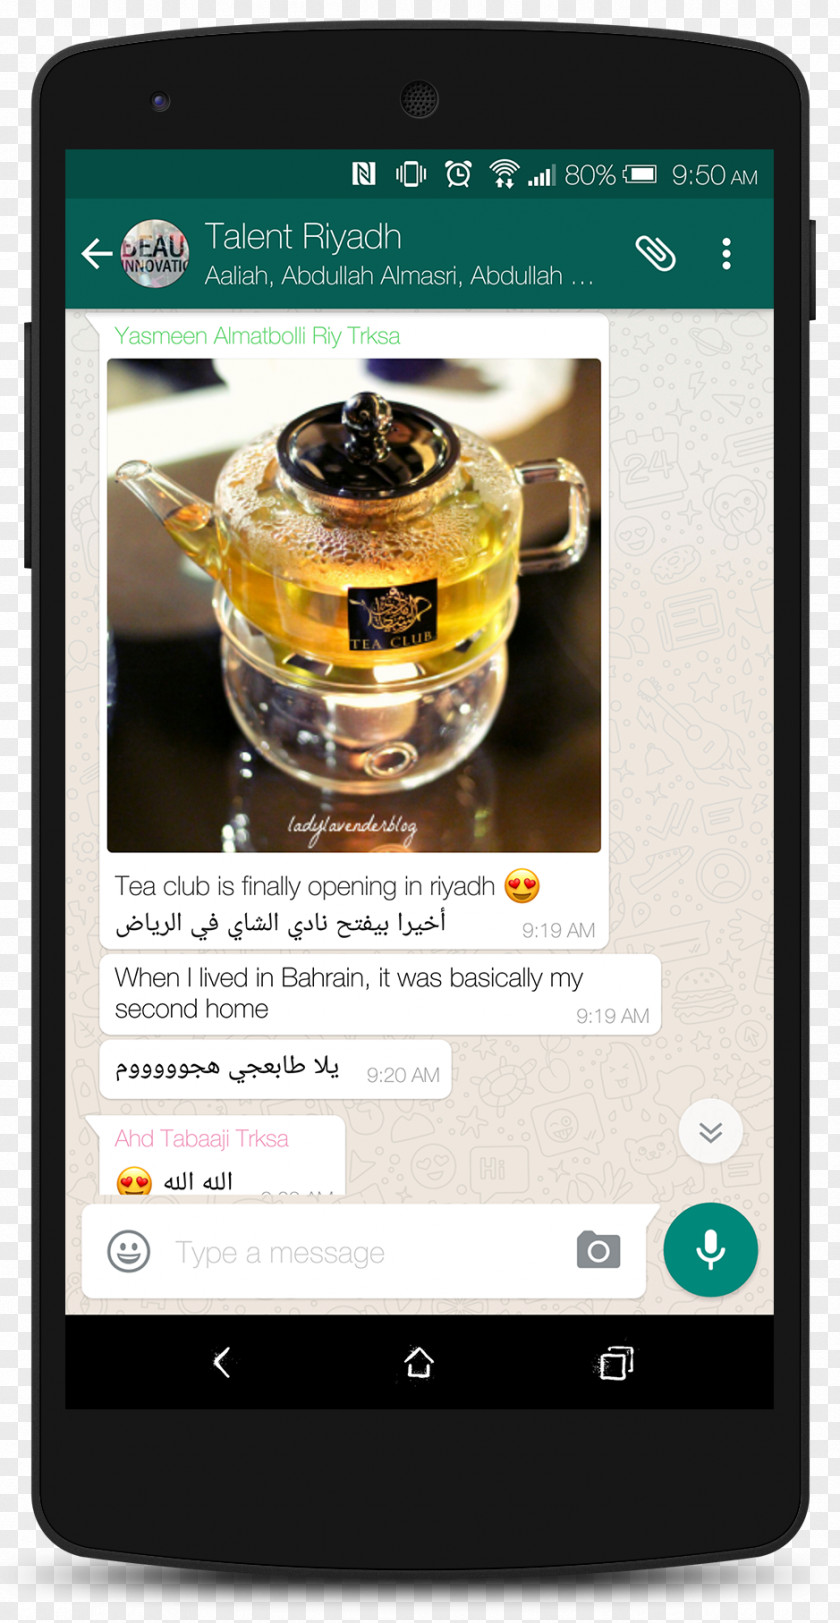 Riyadh Hana Flower & Wallpaper Smartphone PNG